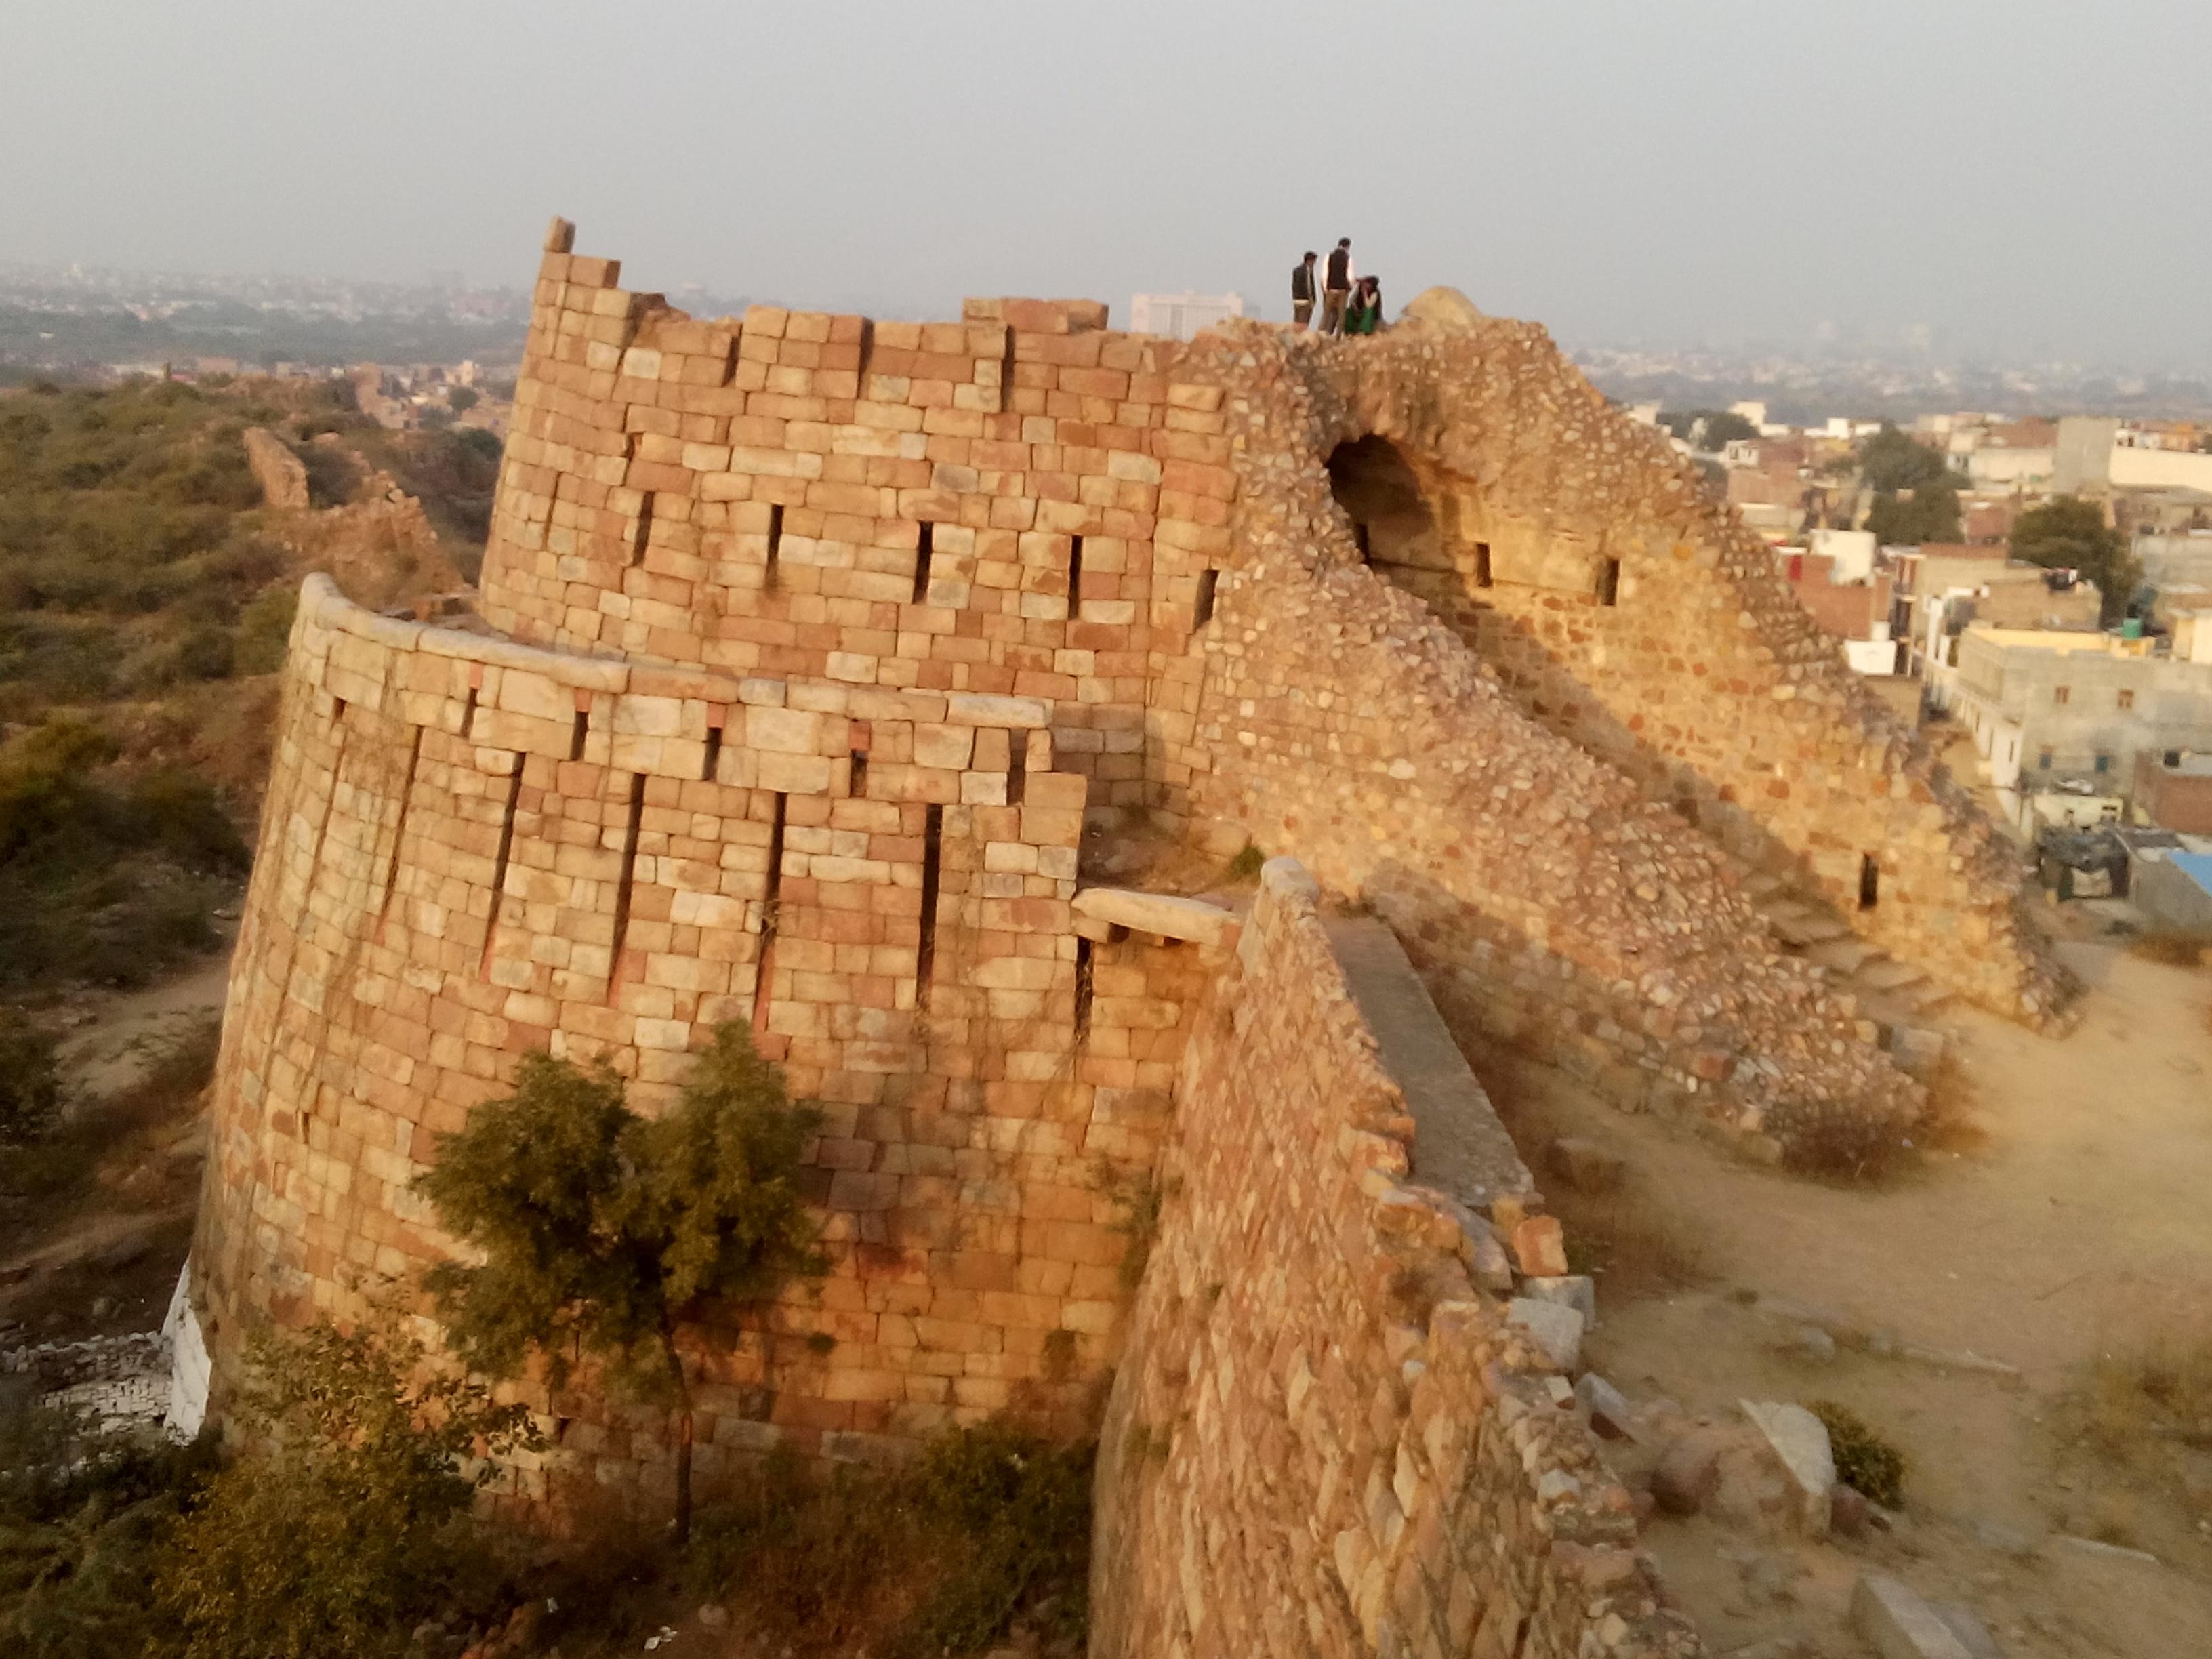 Tughlaqabad Fort and its Crumbling Ruins - Make Heritage Fun!